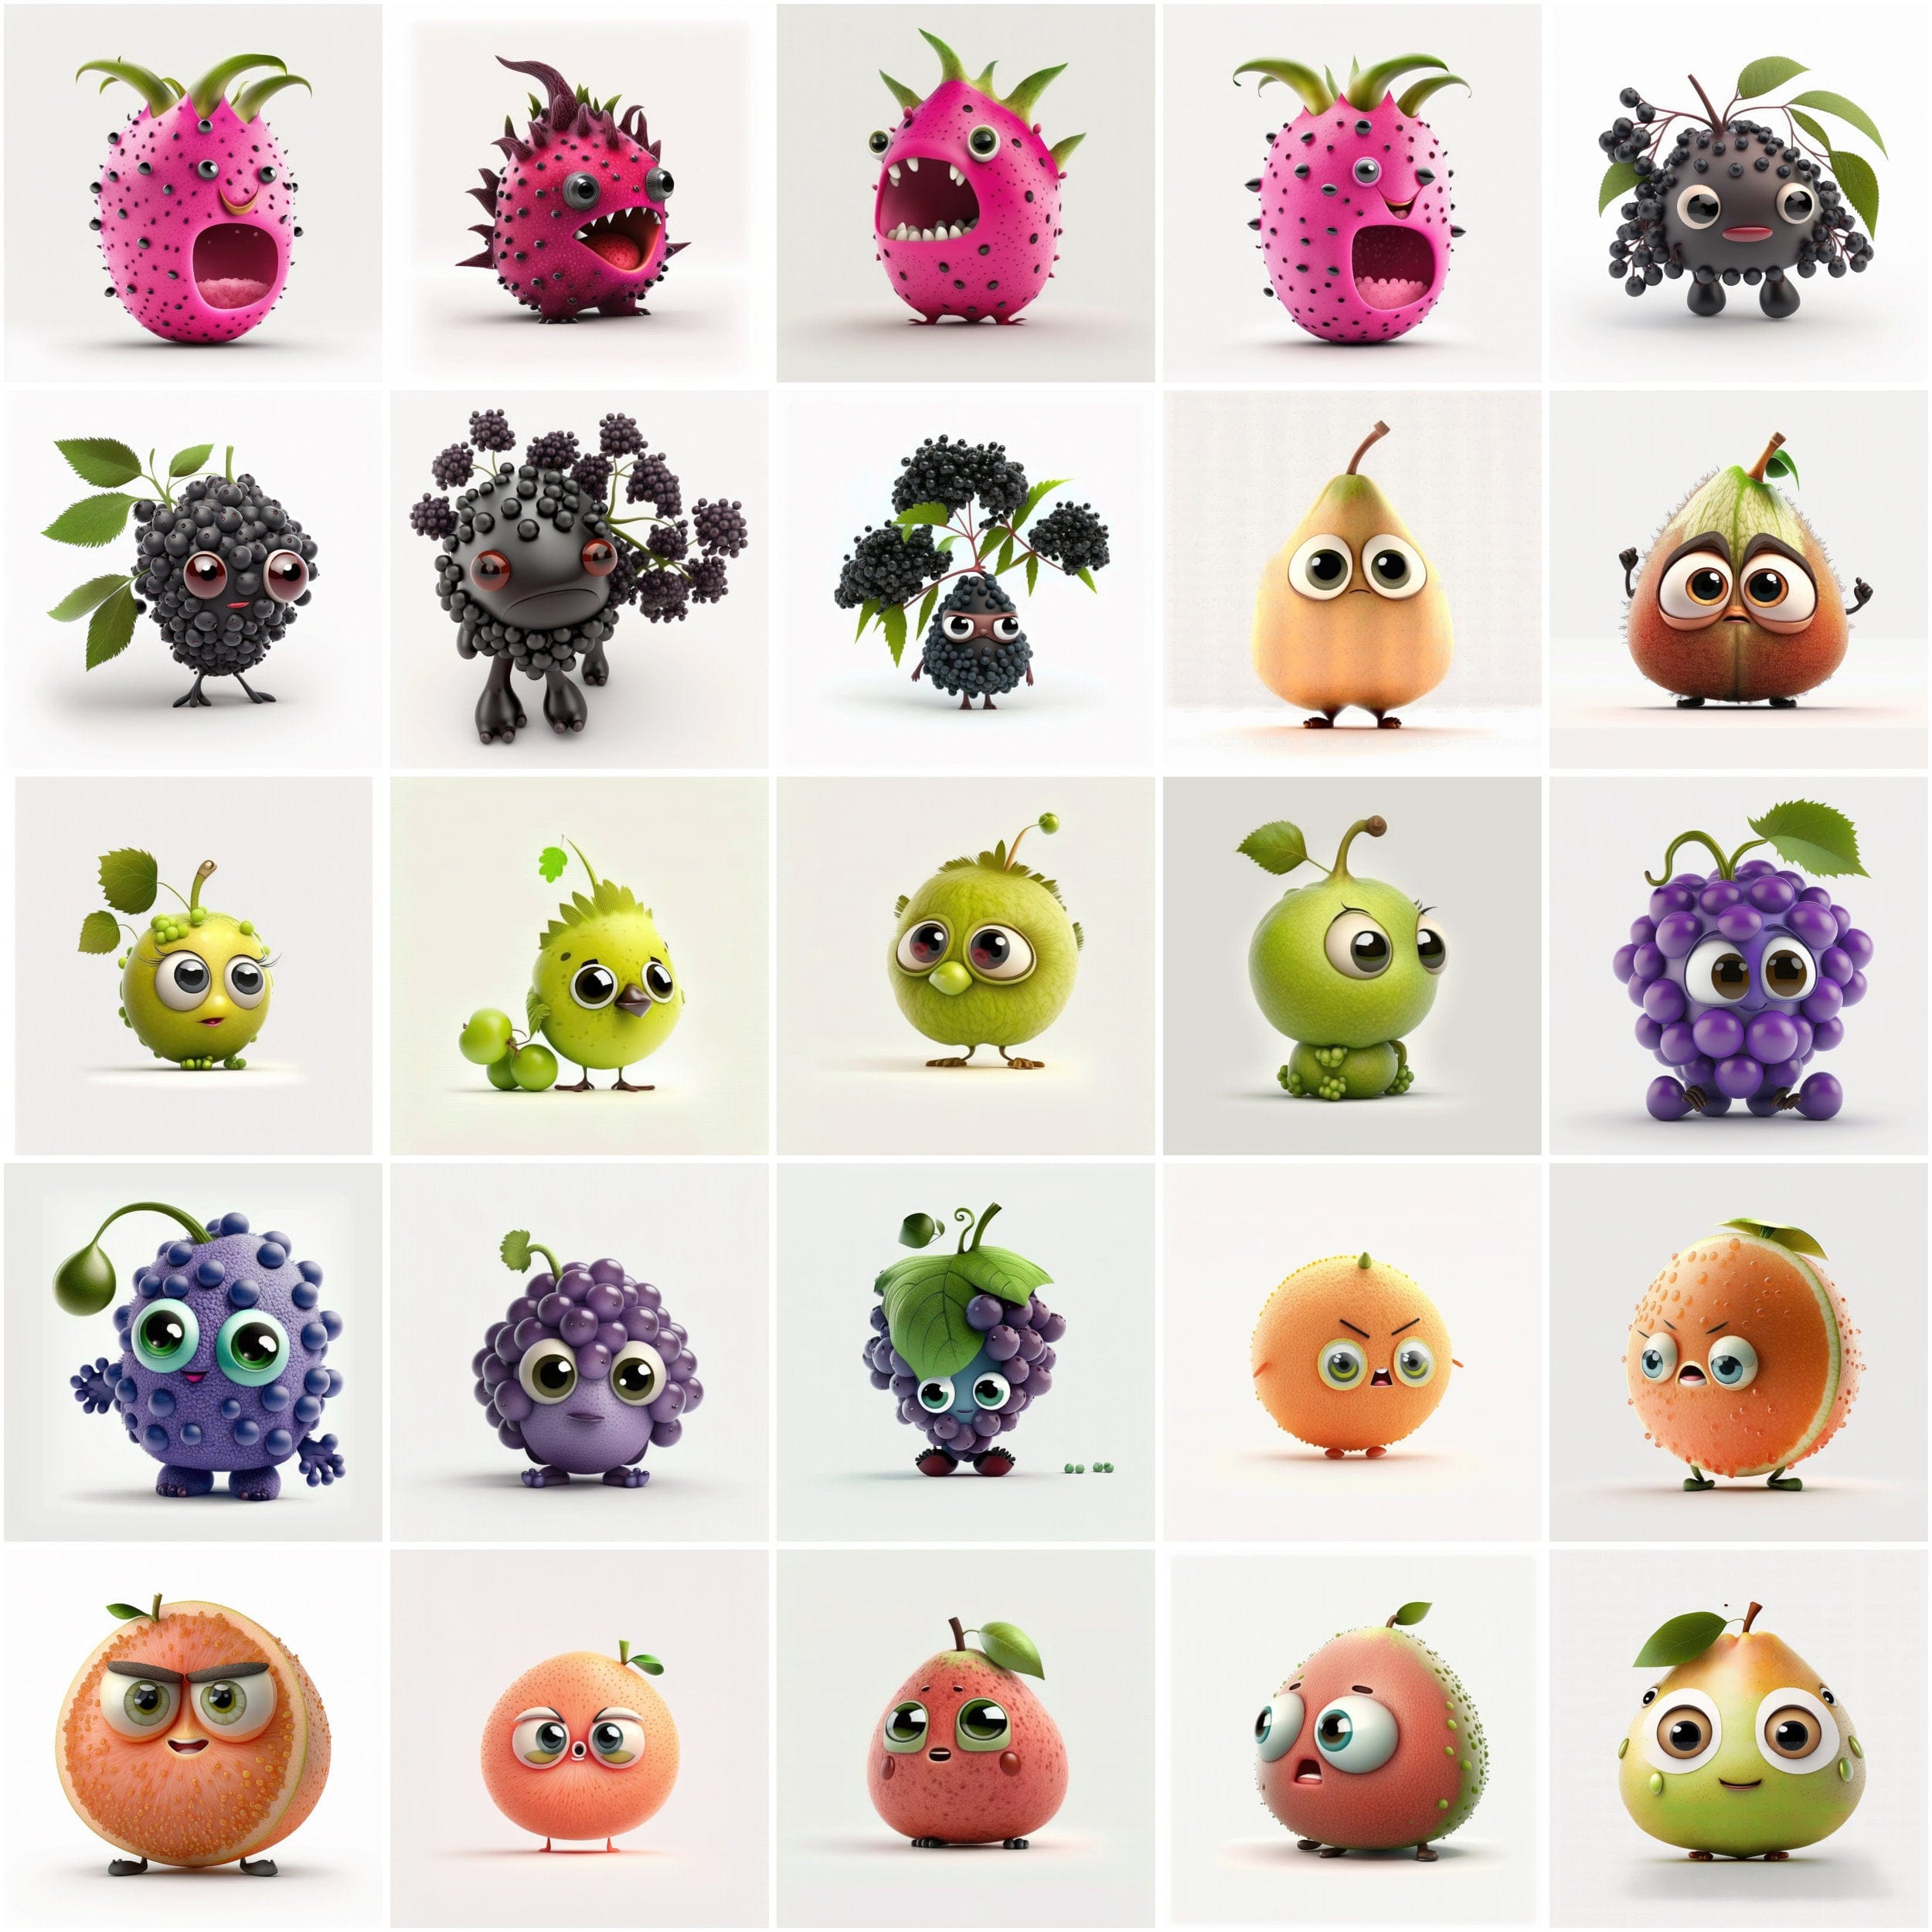 190 Funny Fruit Images Bundle, PNGs with Transparent Background for Social Media, Scrapbooking, Commercial License, Fruits No Background Digital Download Sumobundle